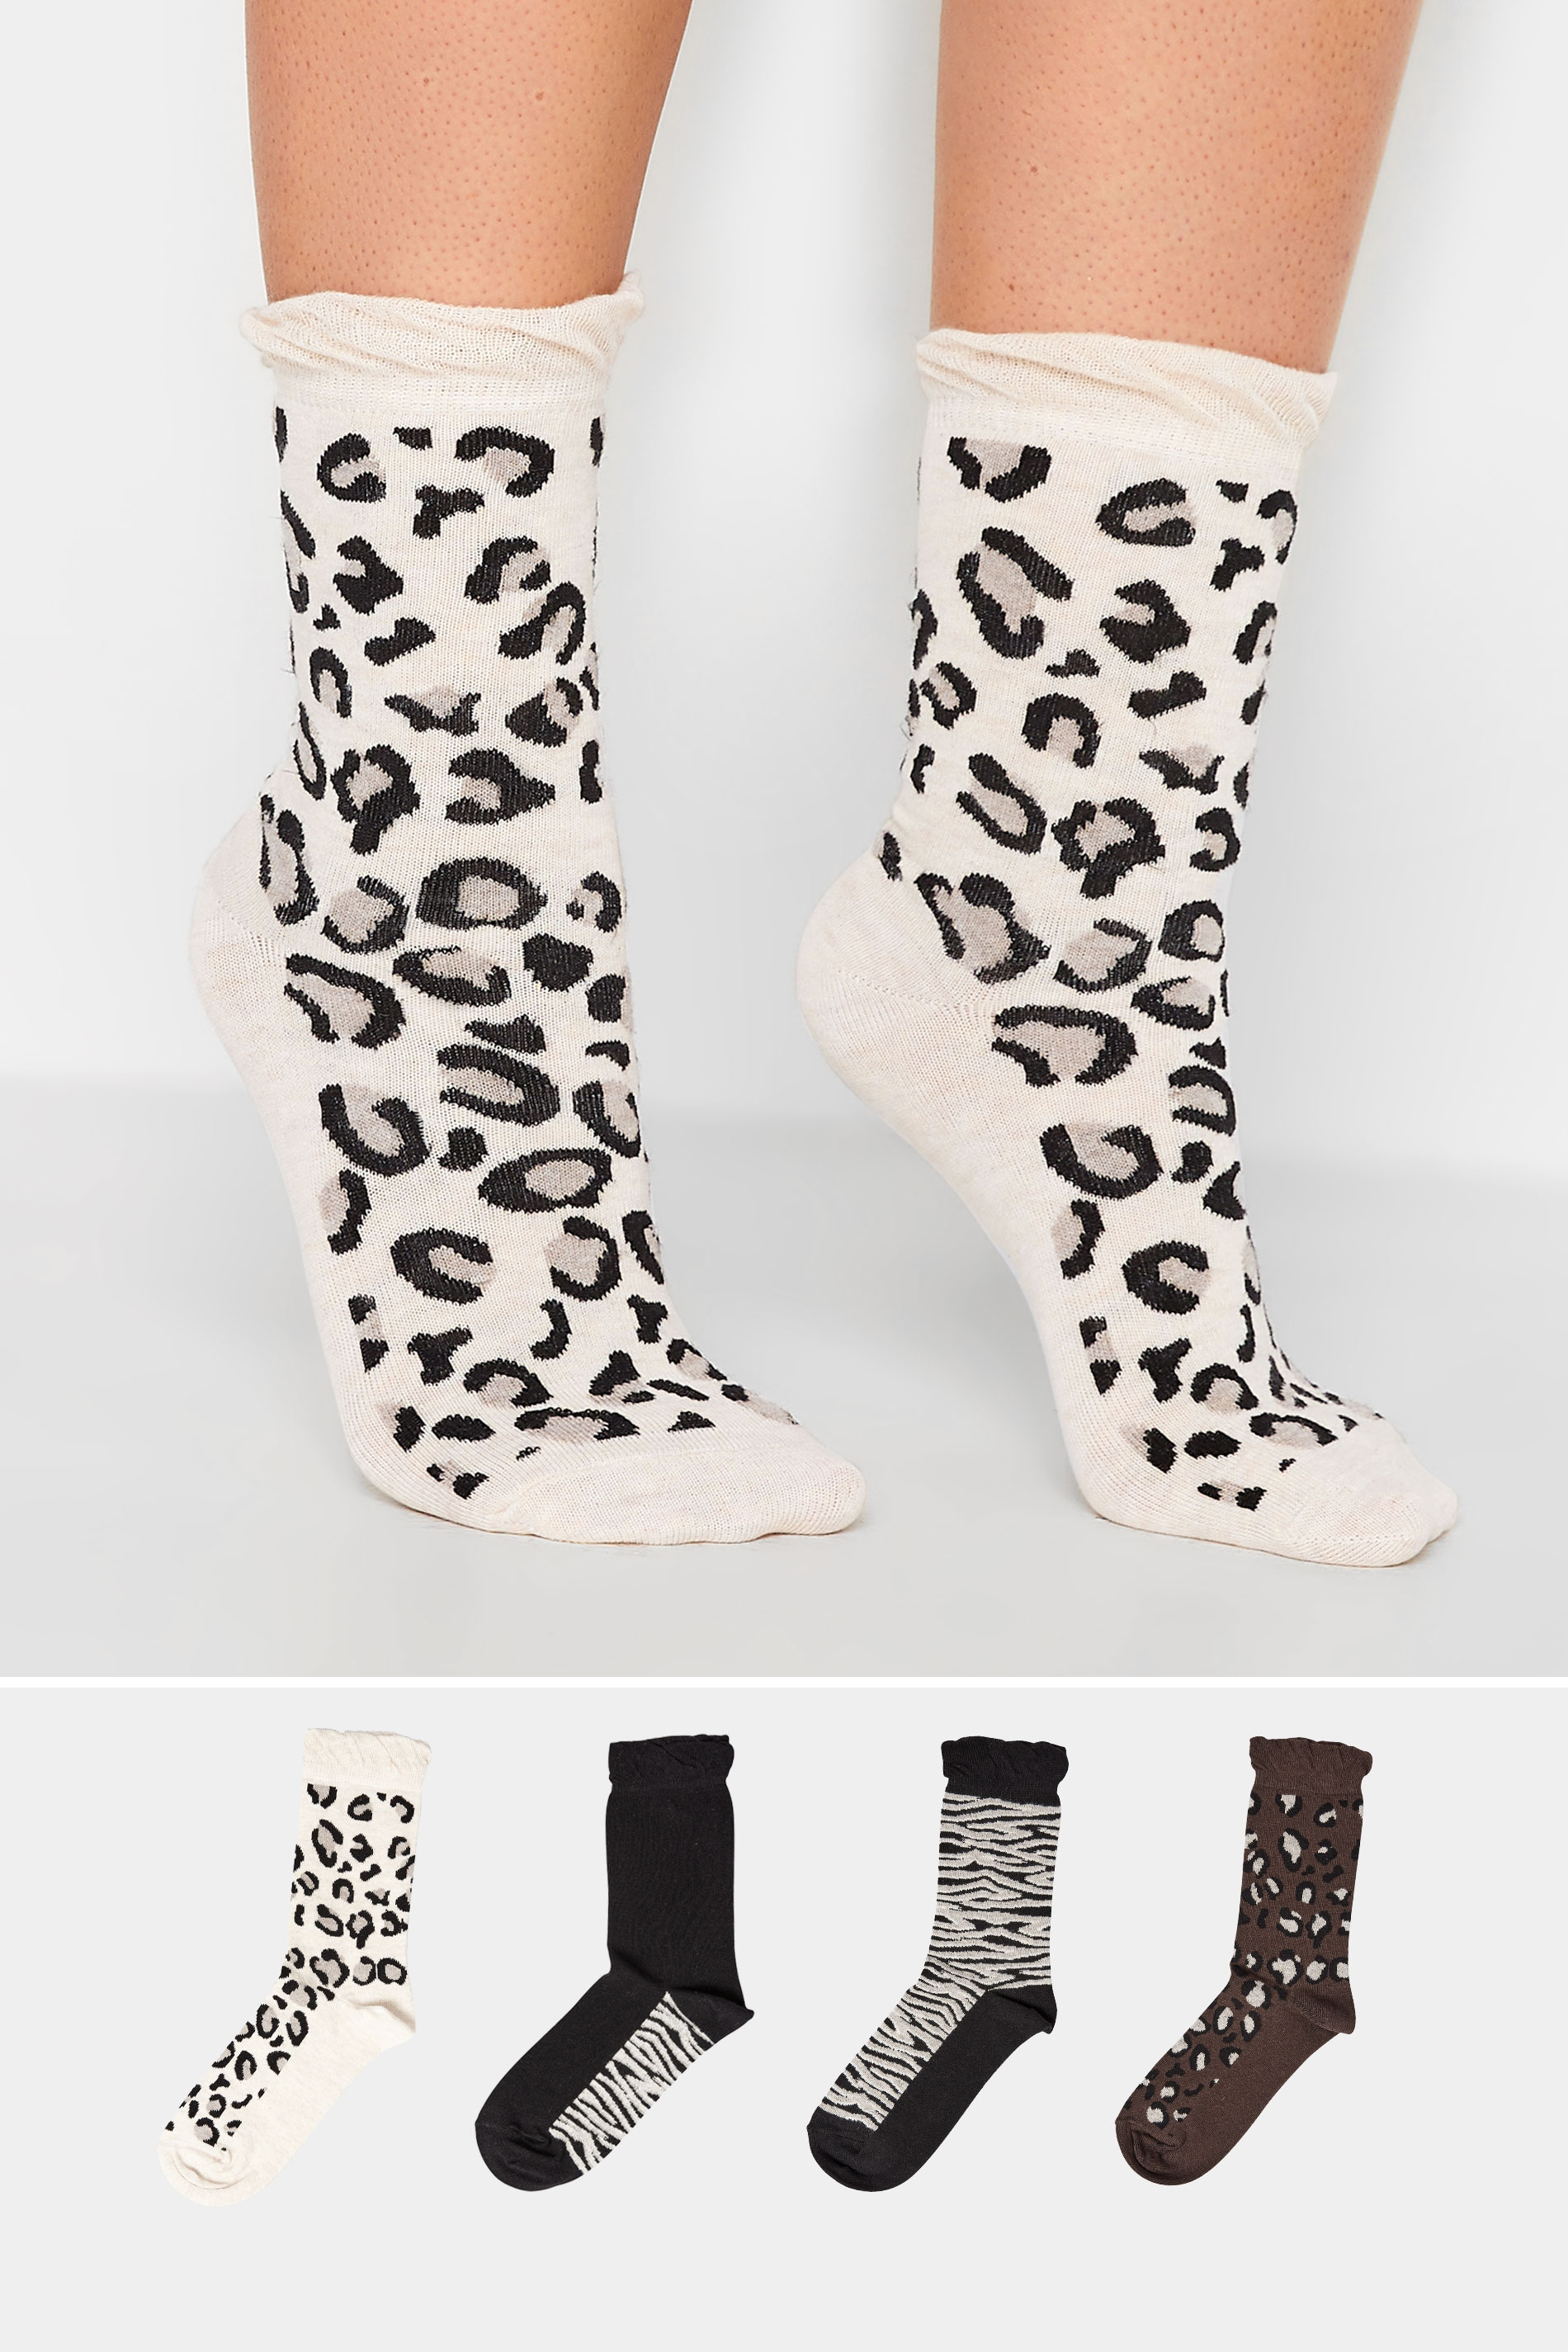 4 PACK White & Black Animal Print Socks | Yours Clothing  1